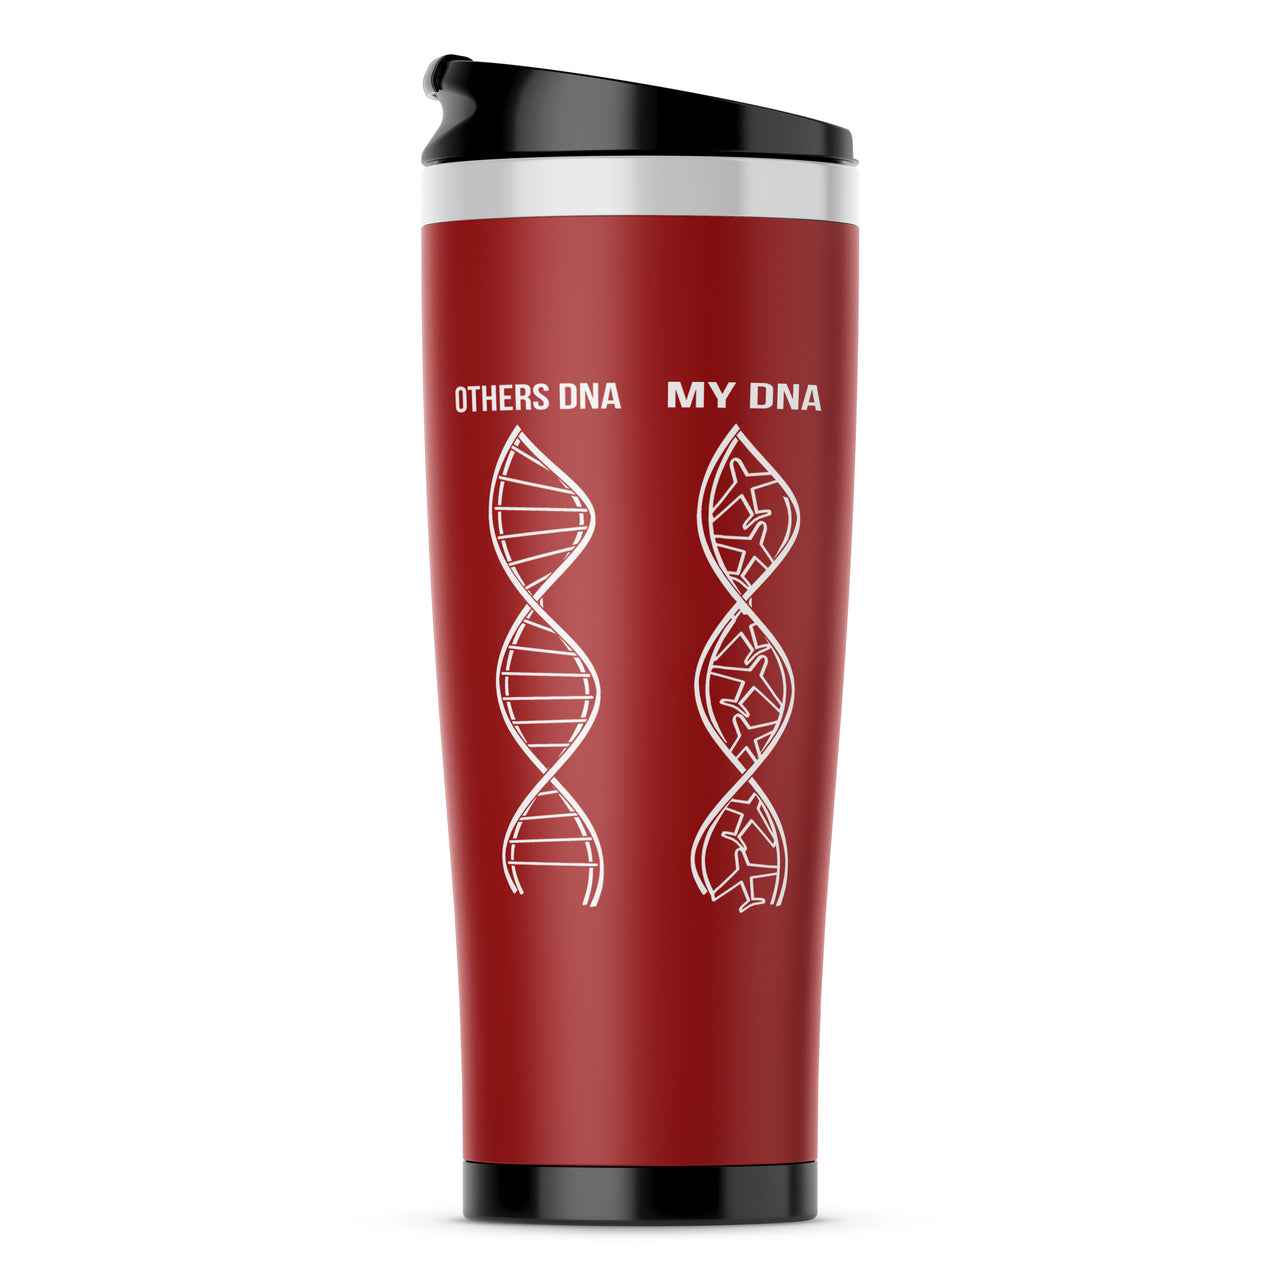 Aviation DNA Designed Travel Mugs